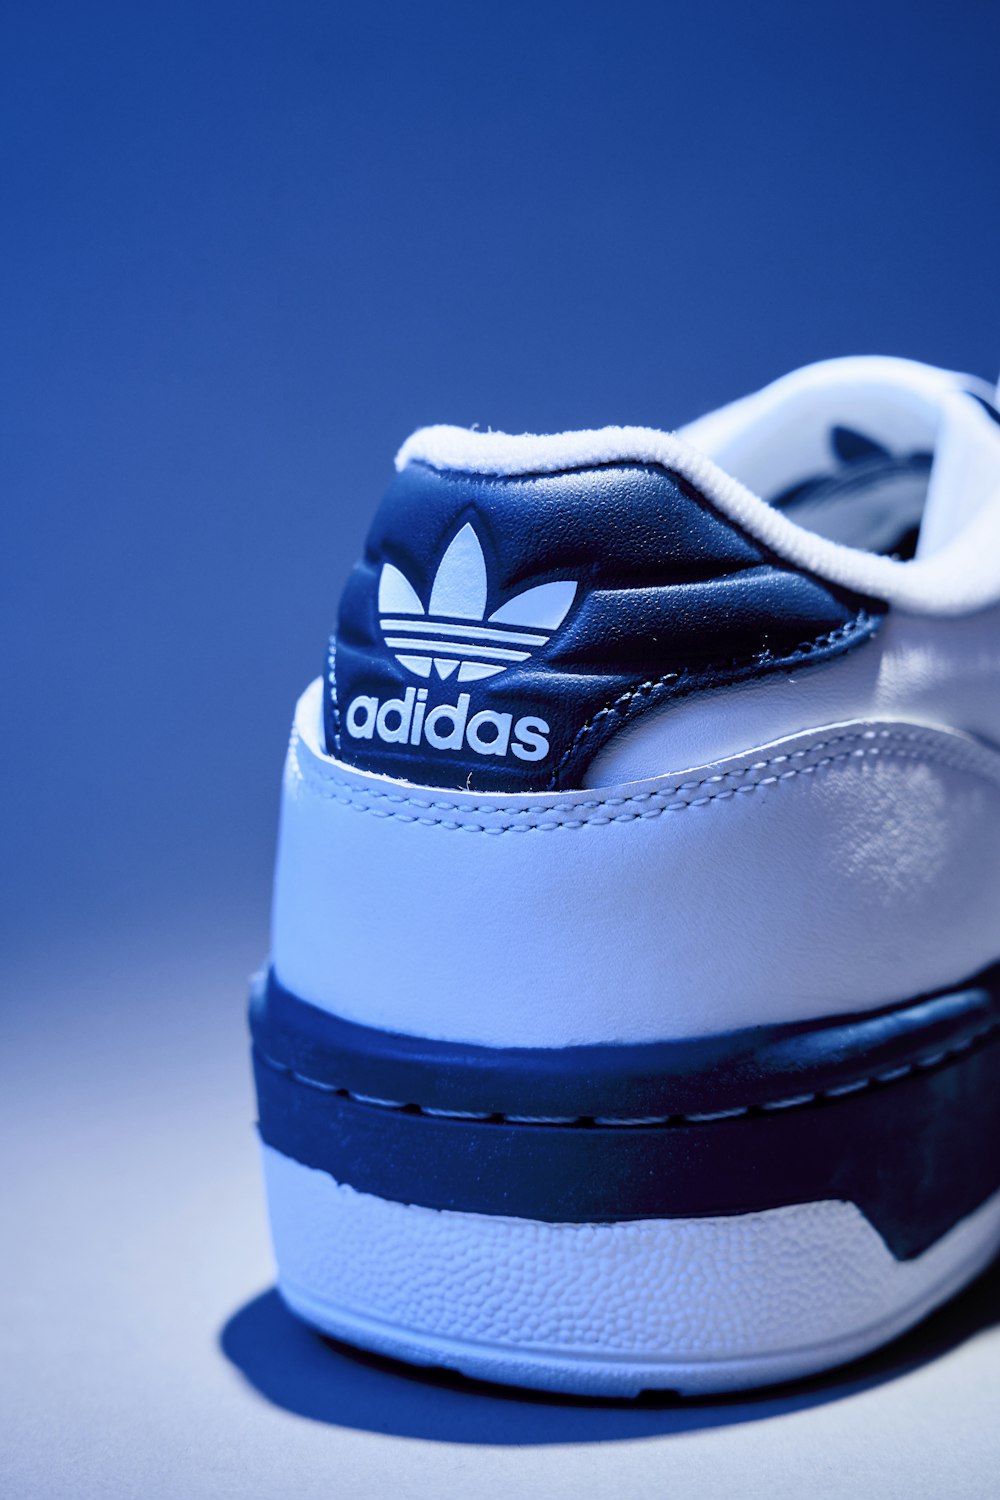 Una sneaker Adidas bianca e blu su un tavolo